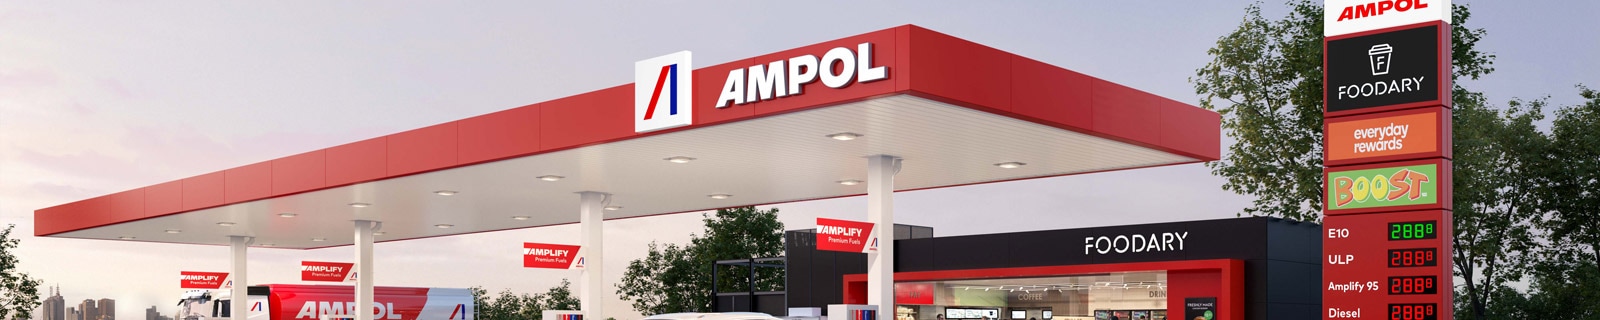 Ampol gas station